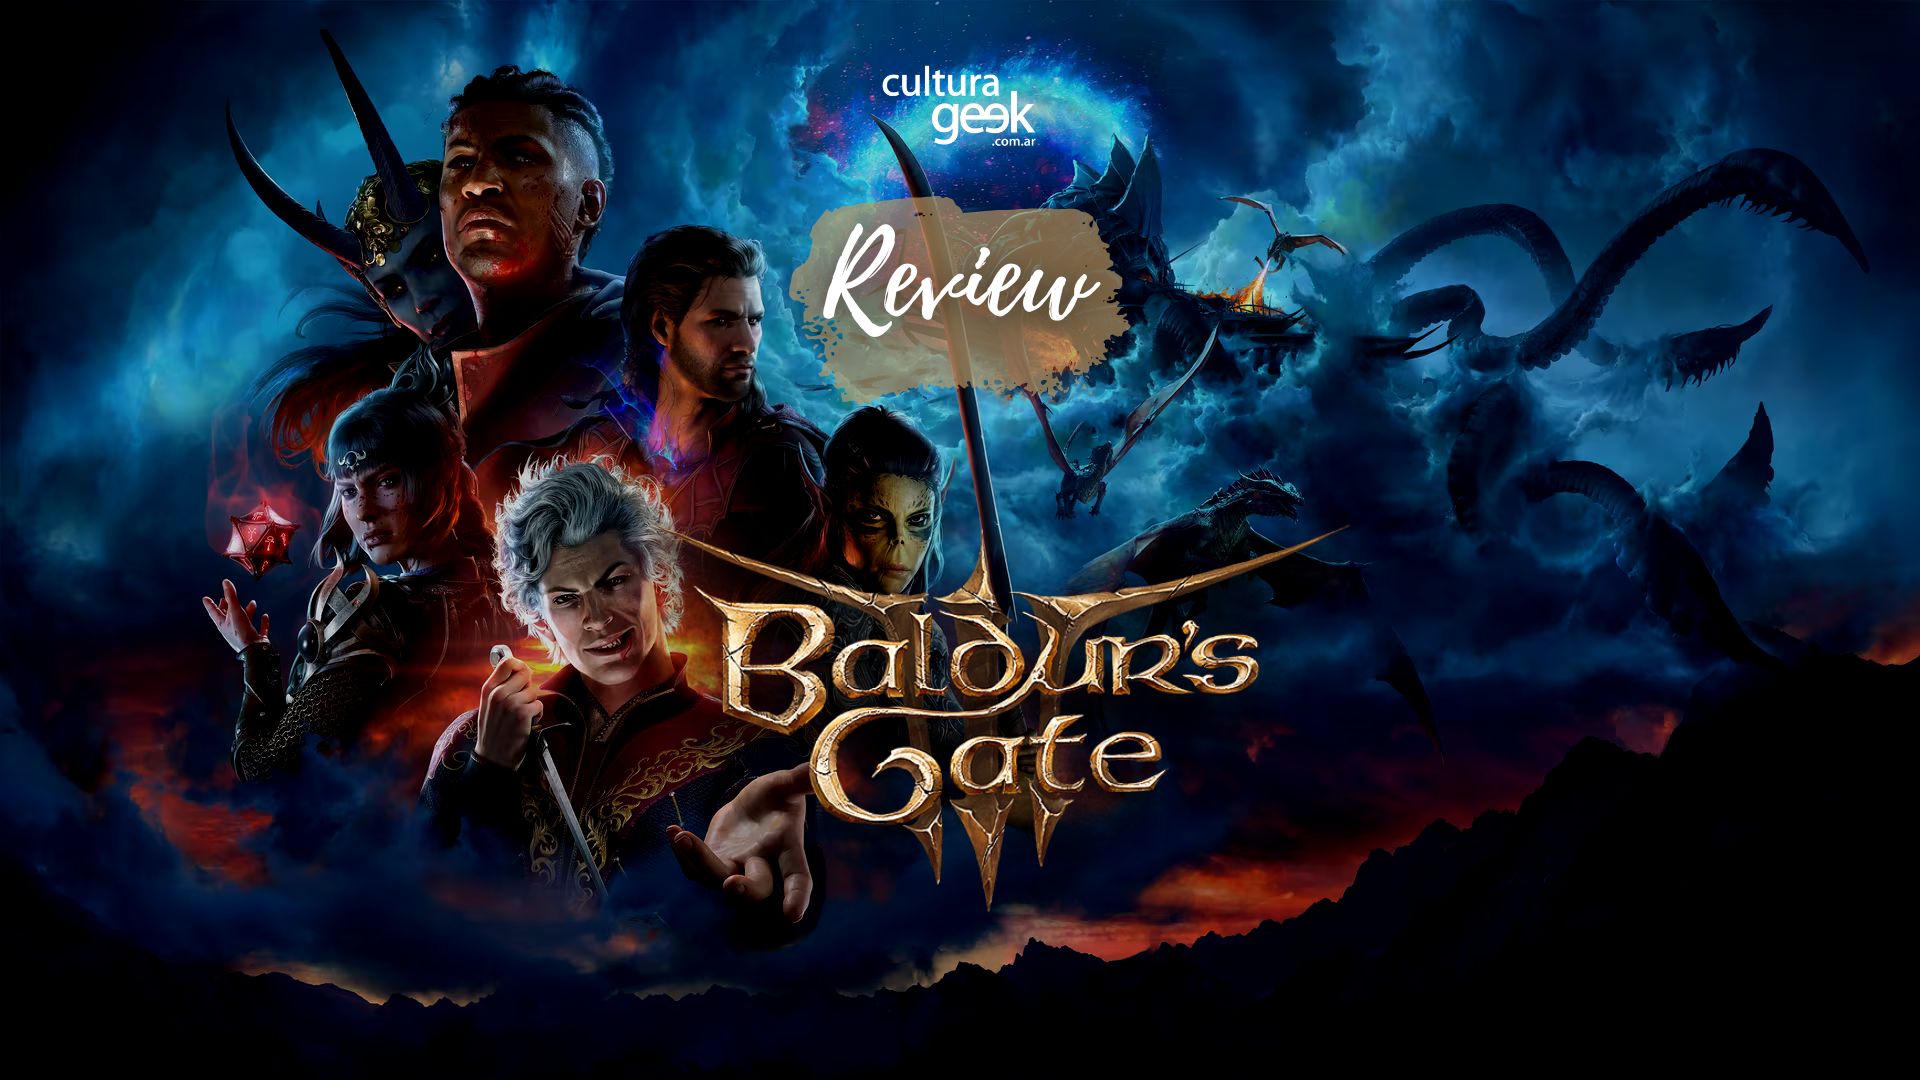 Baldur's Gate 3 currently sitting at 9.2 user score on Metacritic